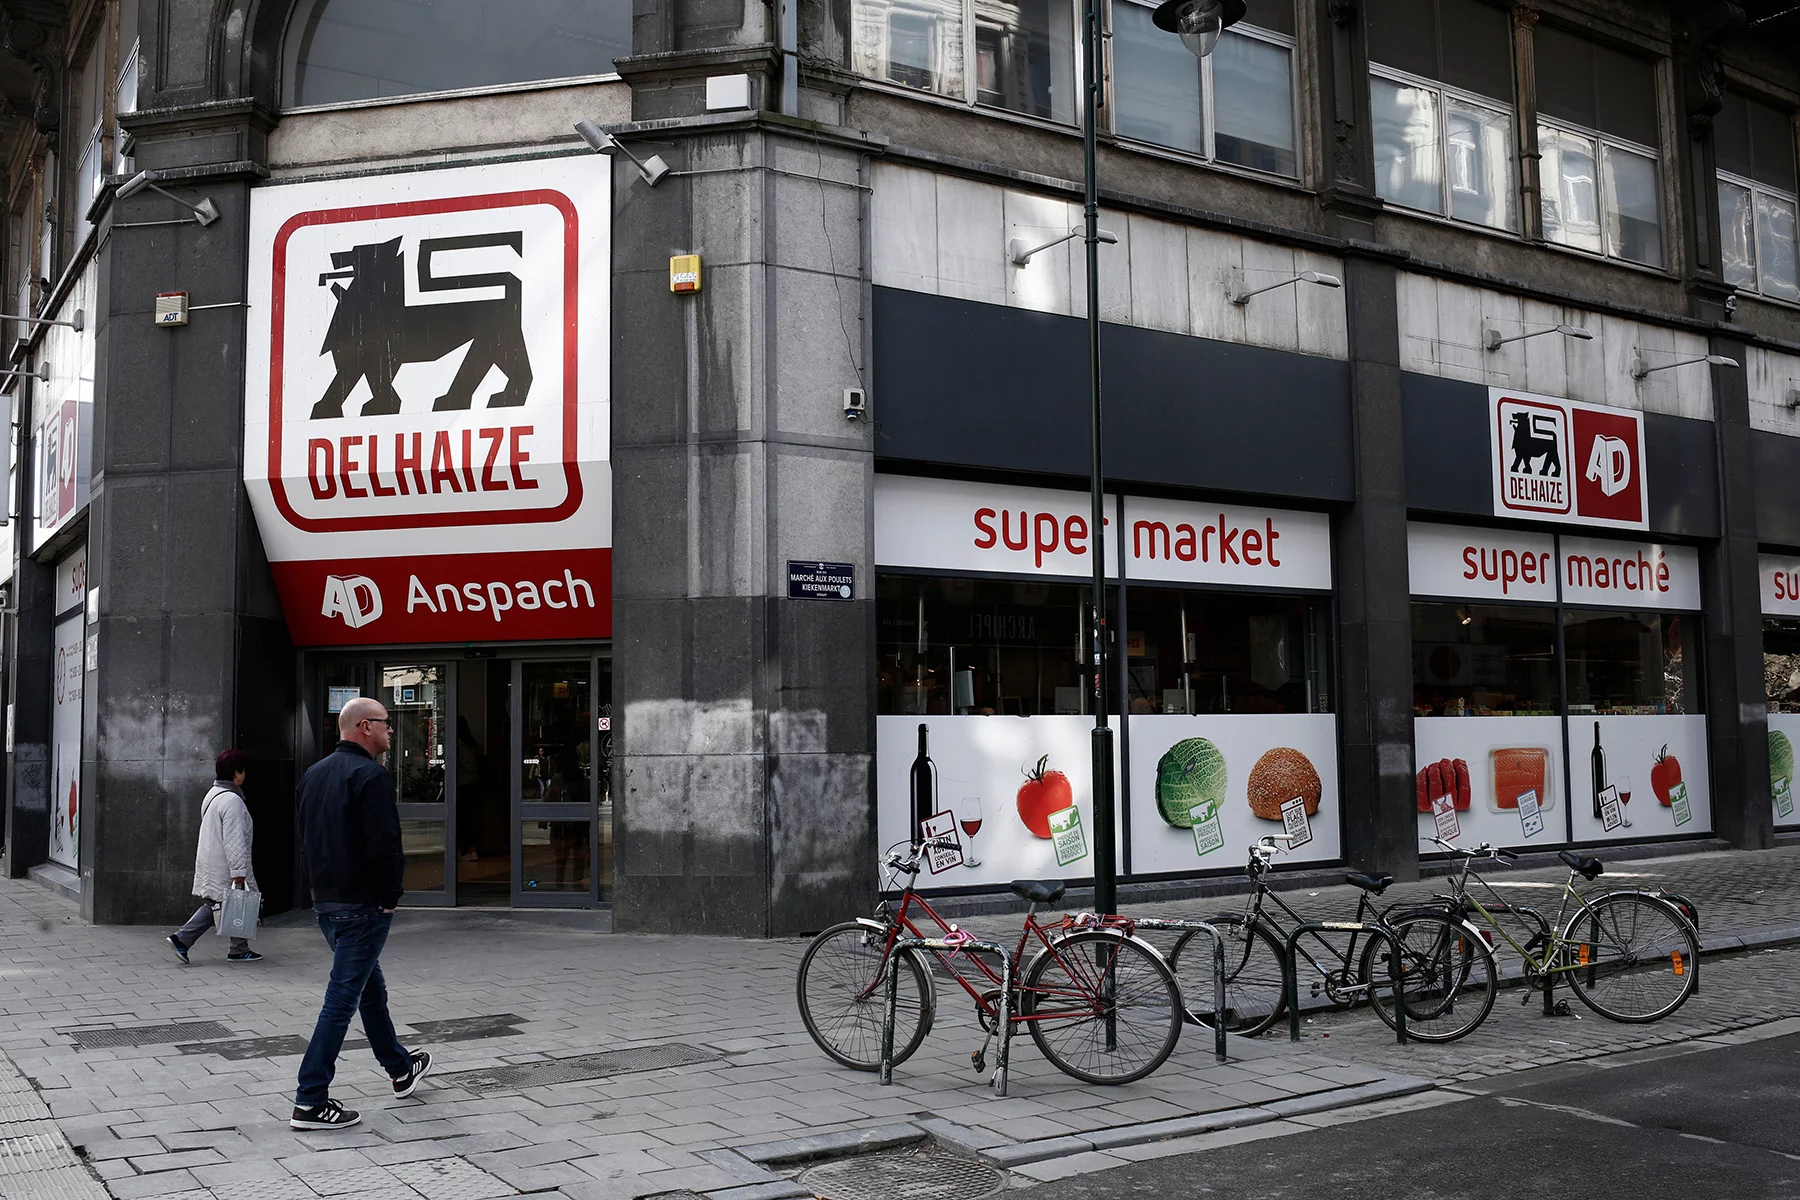 Delhaize supermarket in Brussels, Belgium